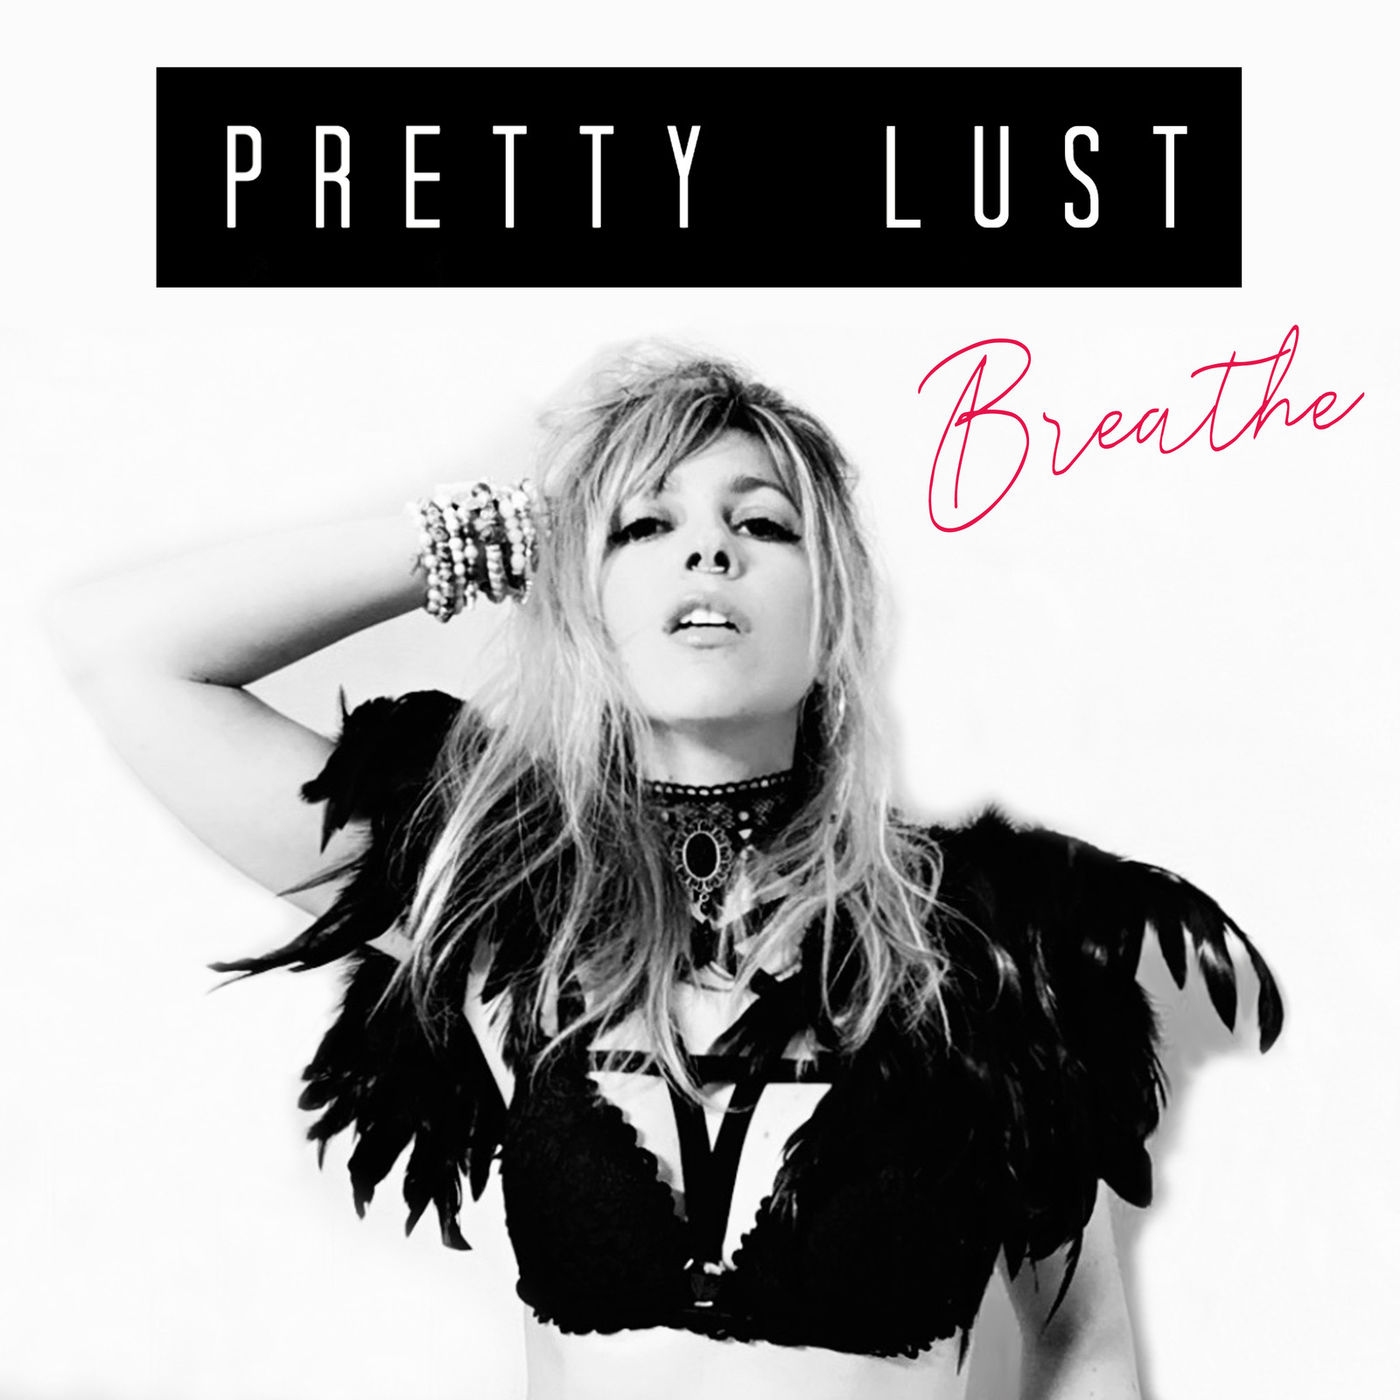 Pretty Lust - Breathe (Single) (2019)